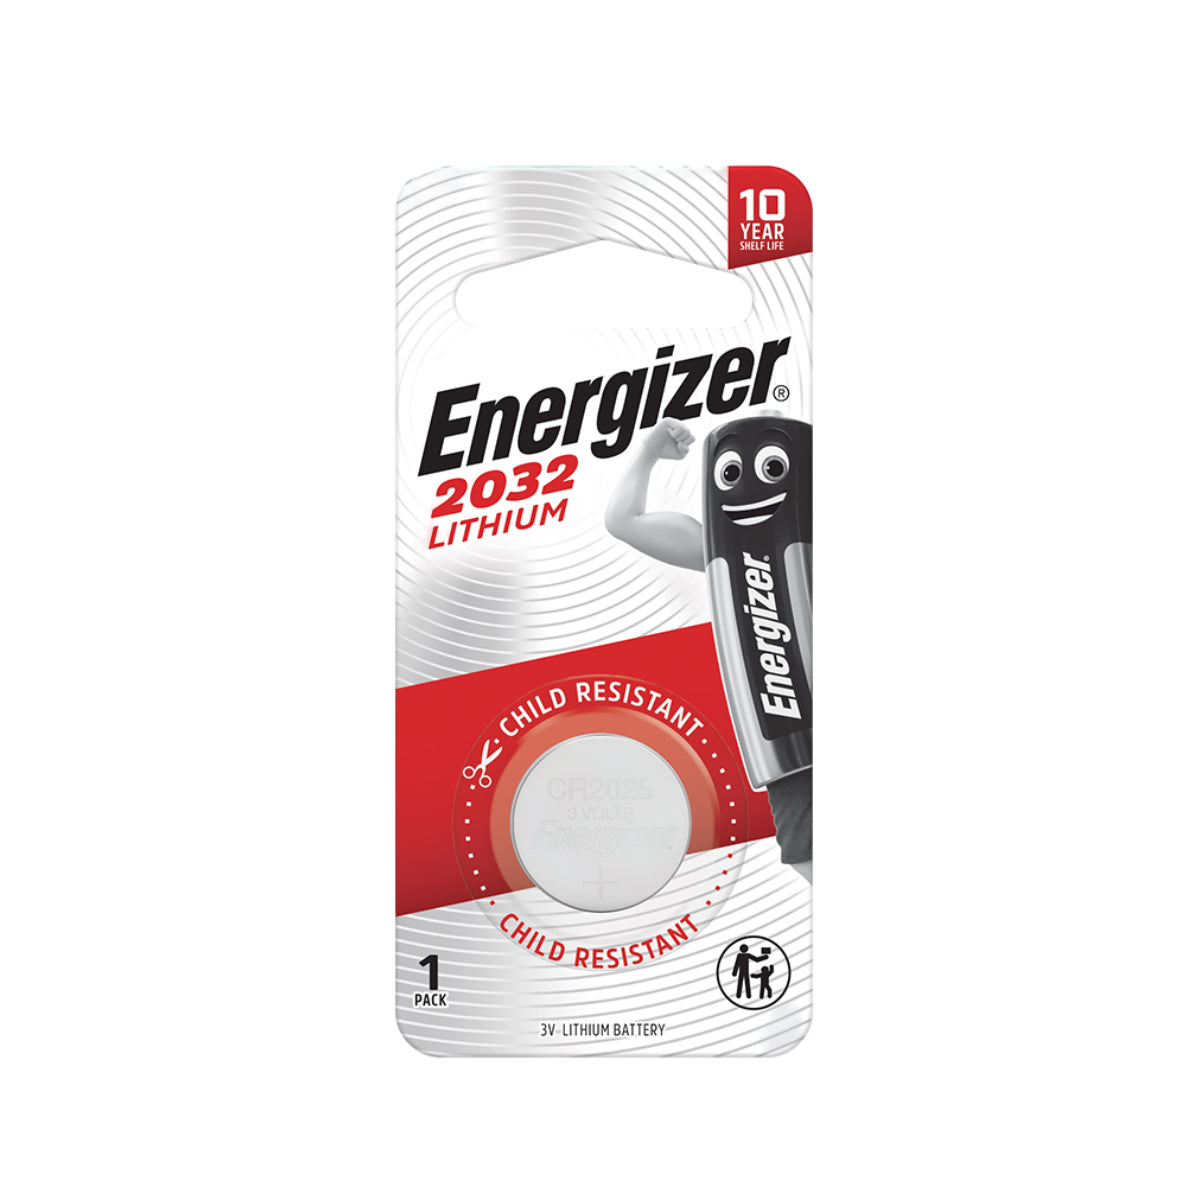 Energizer 19.61000 CR 2032 Lithium Battery, 3V, 190 mAh 